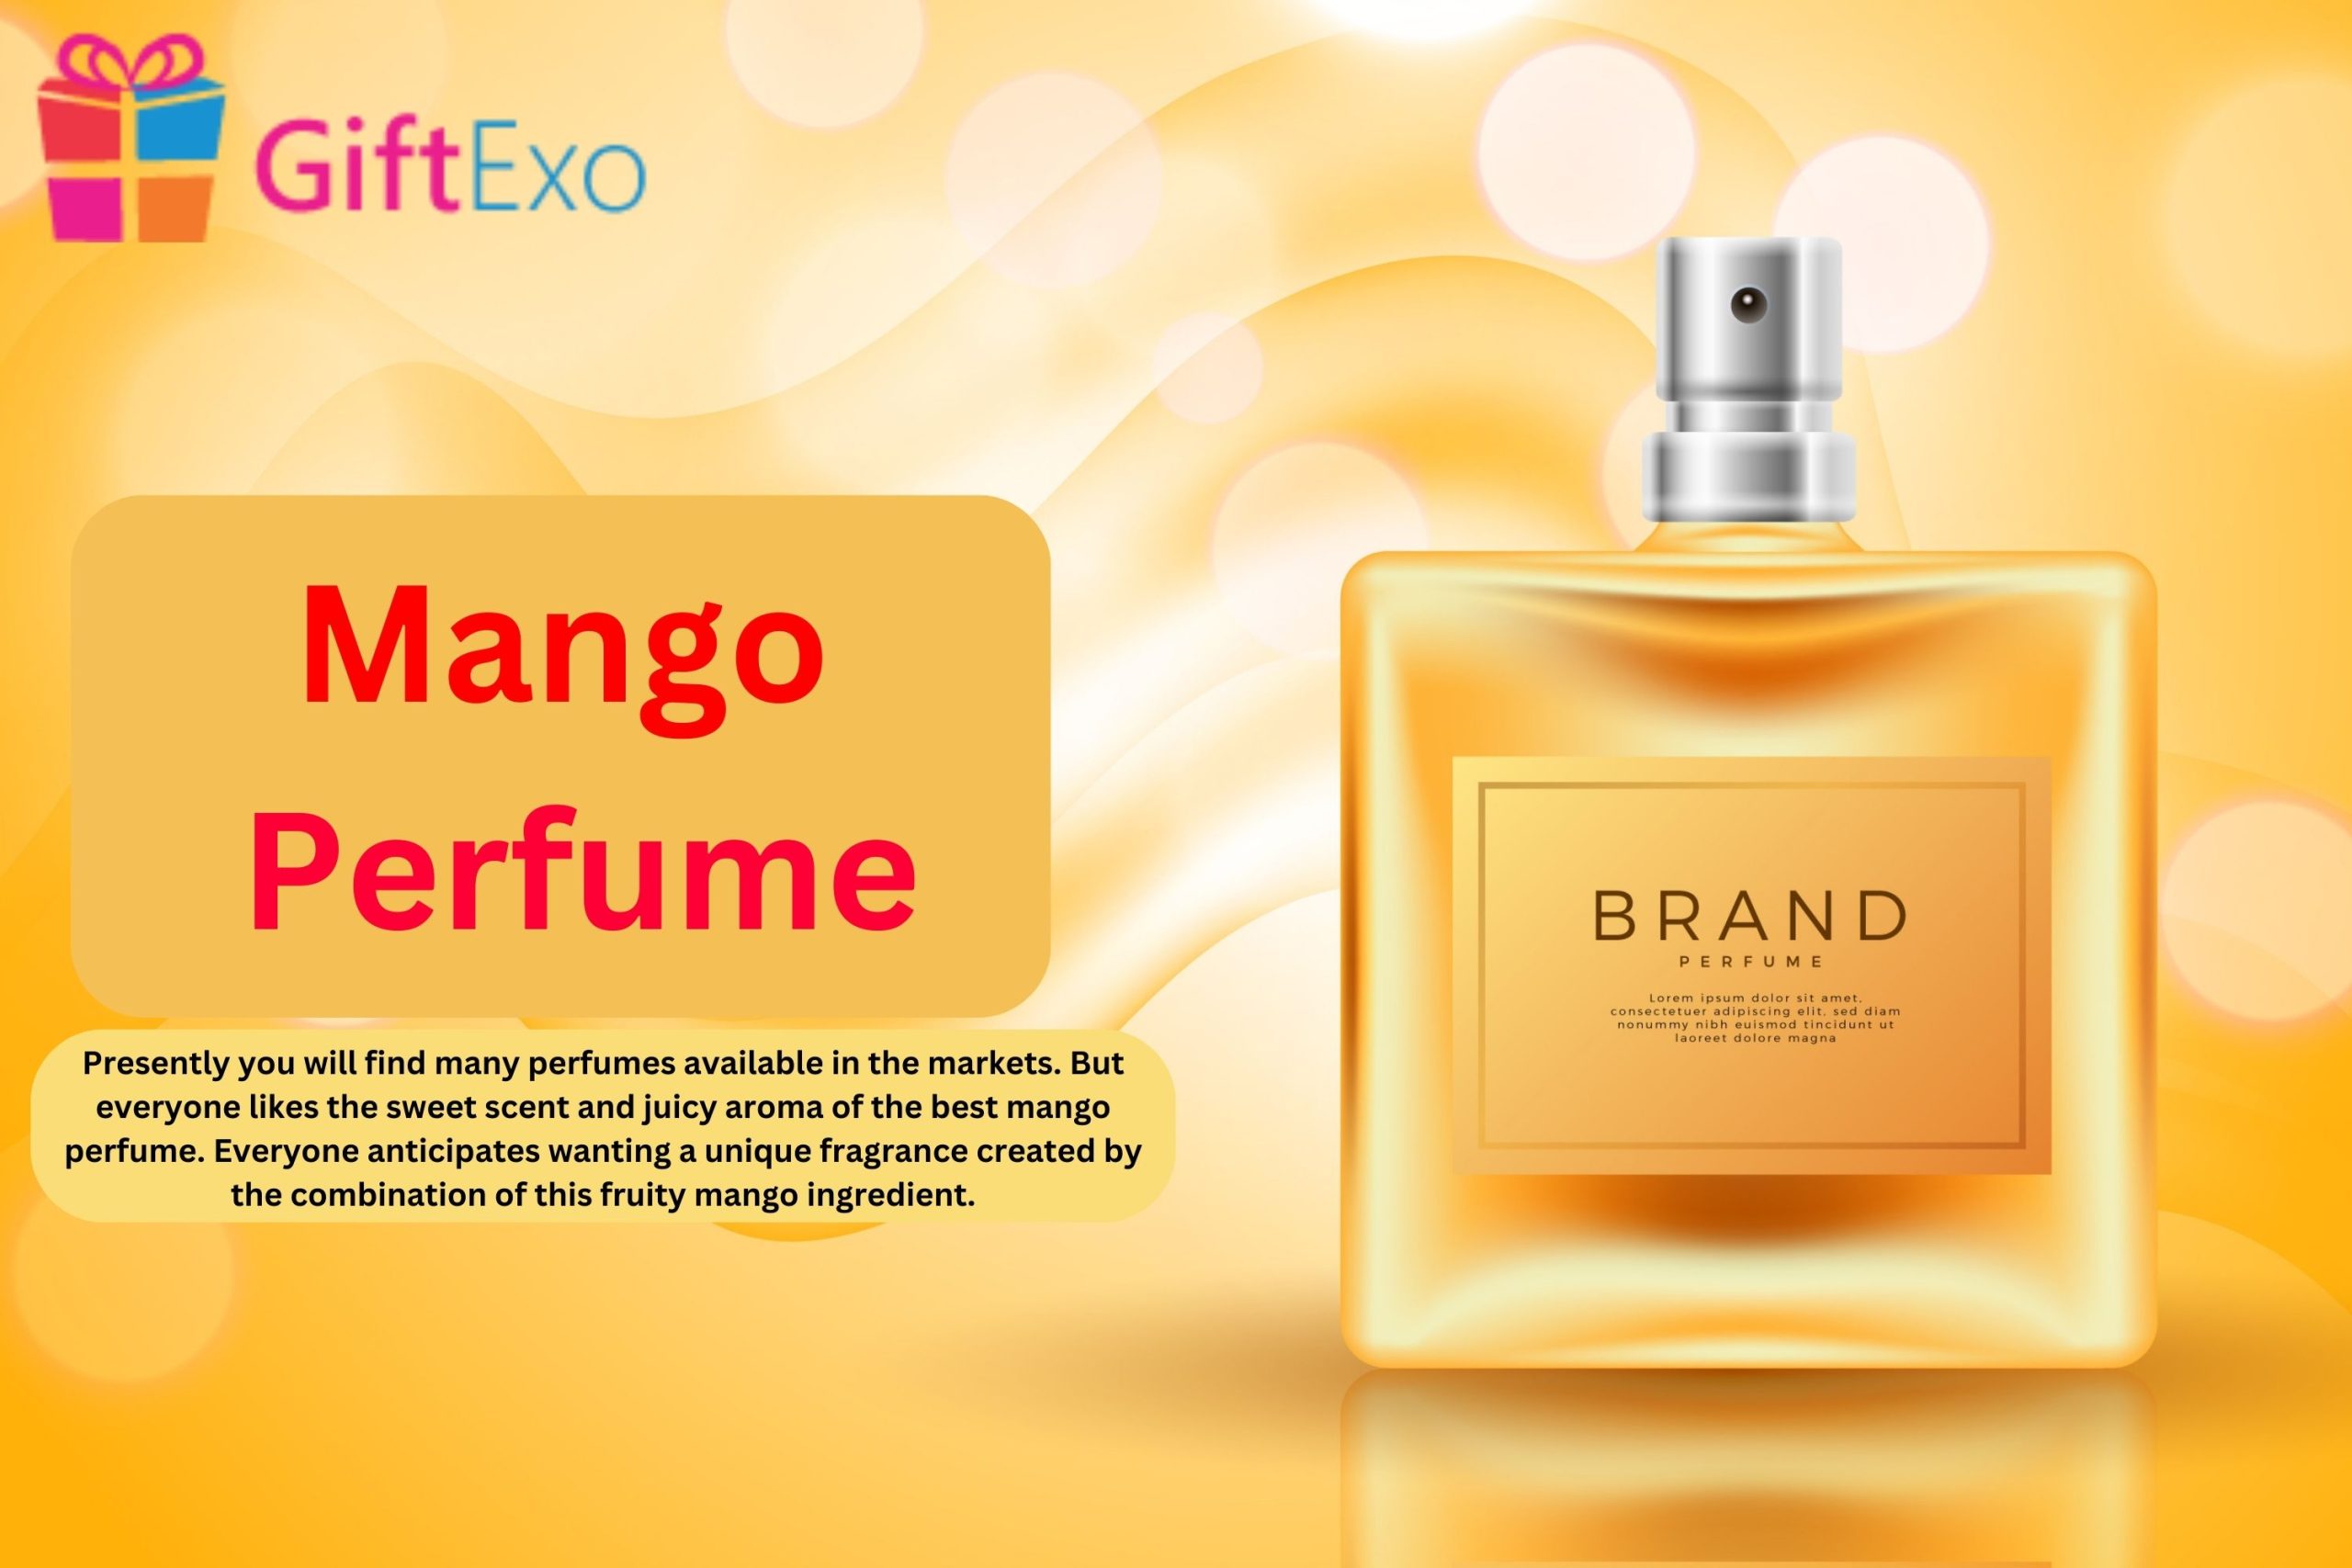 Mango Perfume